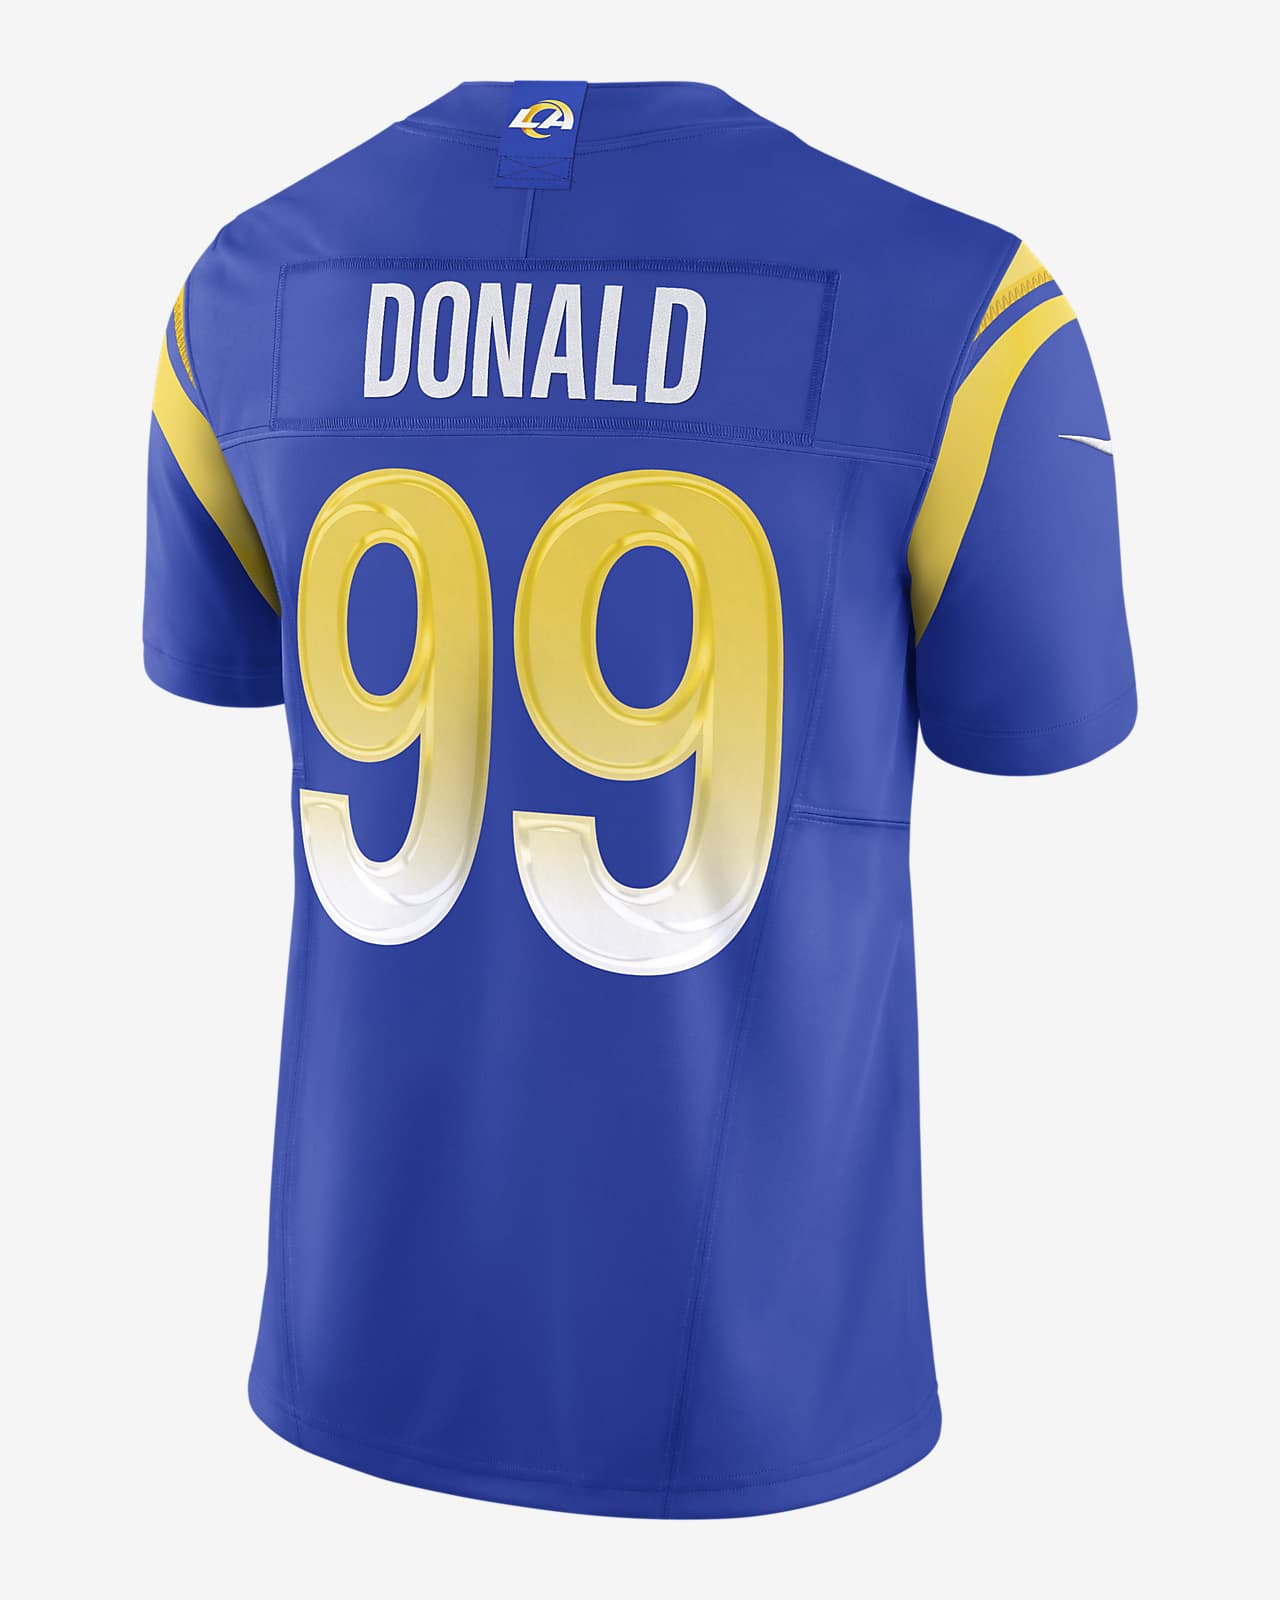 99 donald jersey